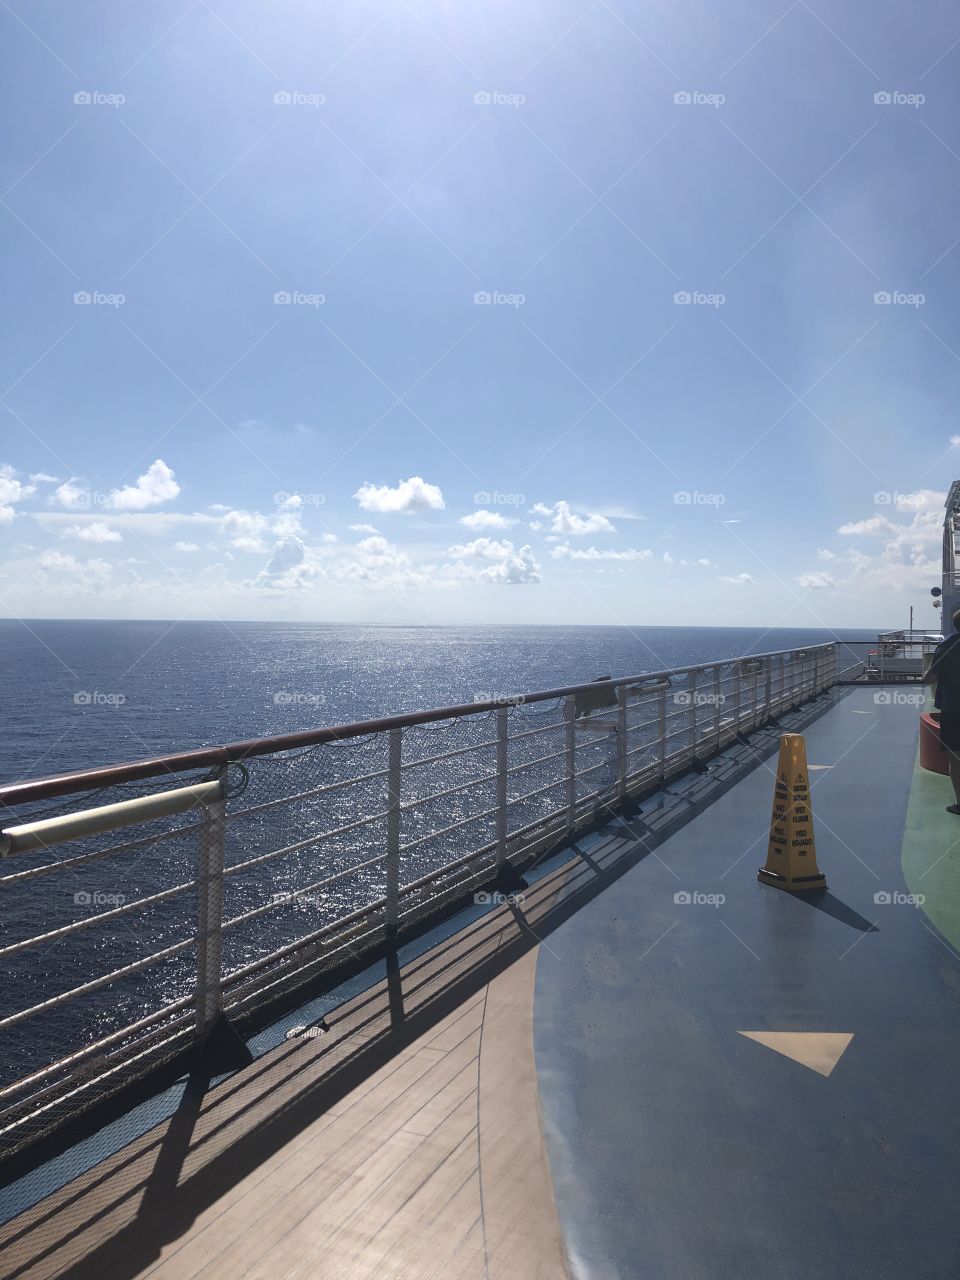 Exploring the Cruise September 2018!!